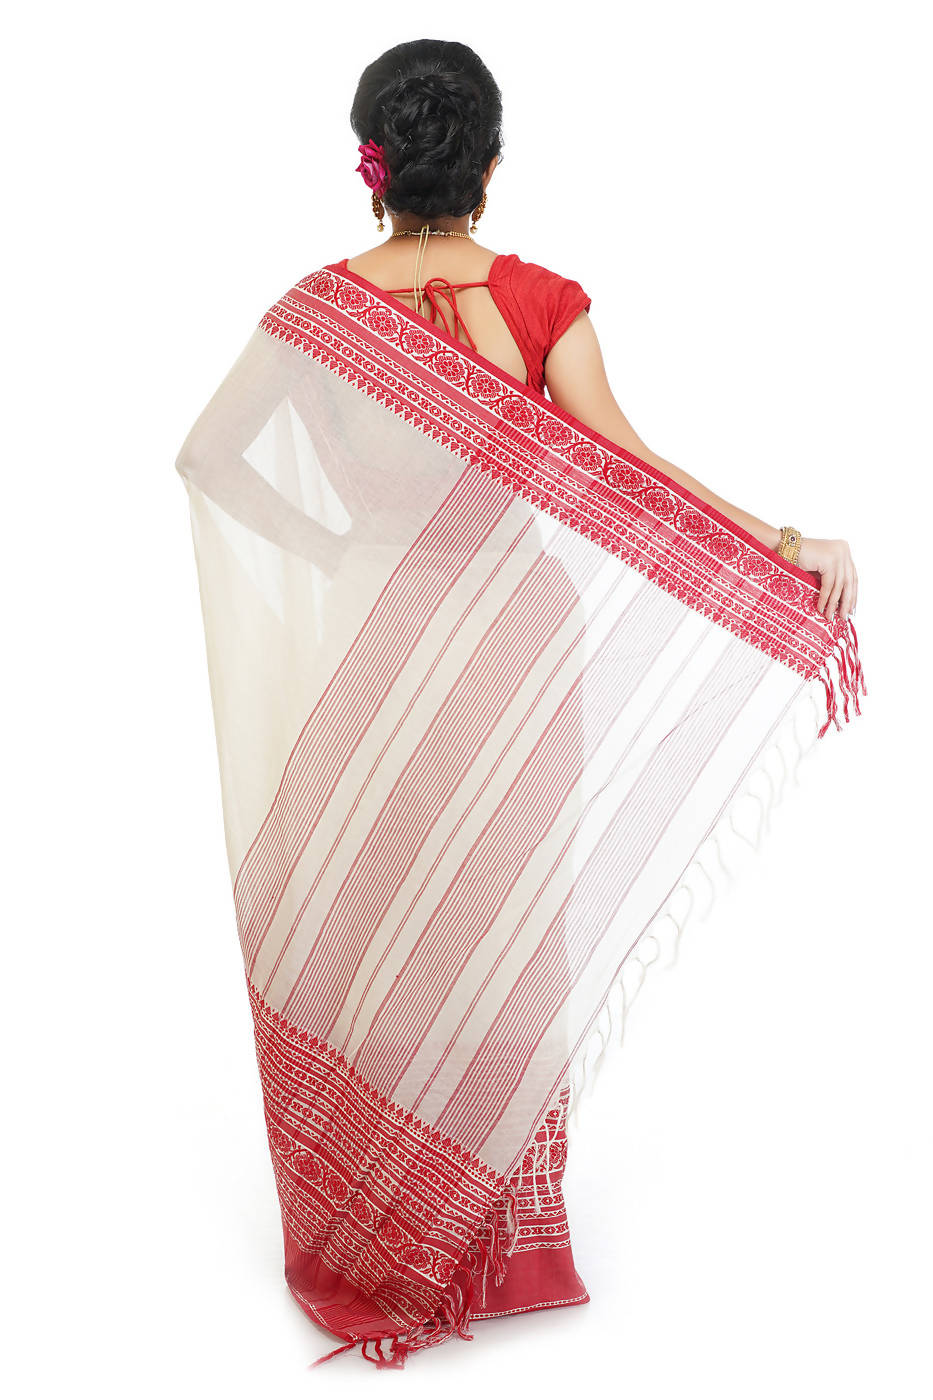 Handloom bengal red and white cotton saree